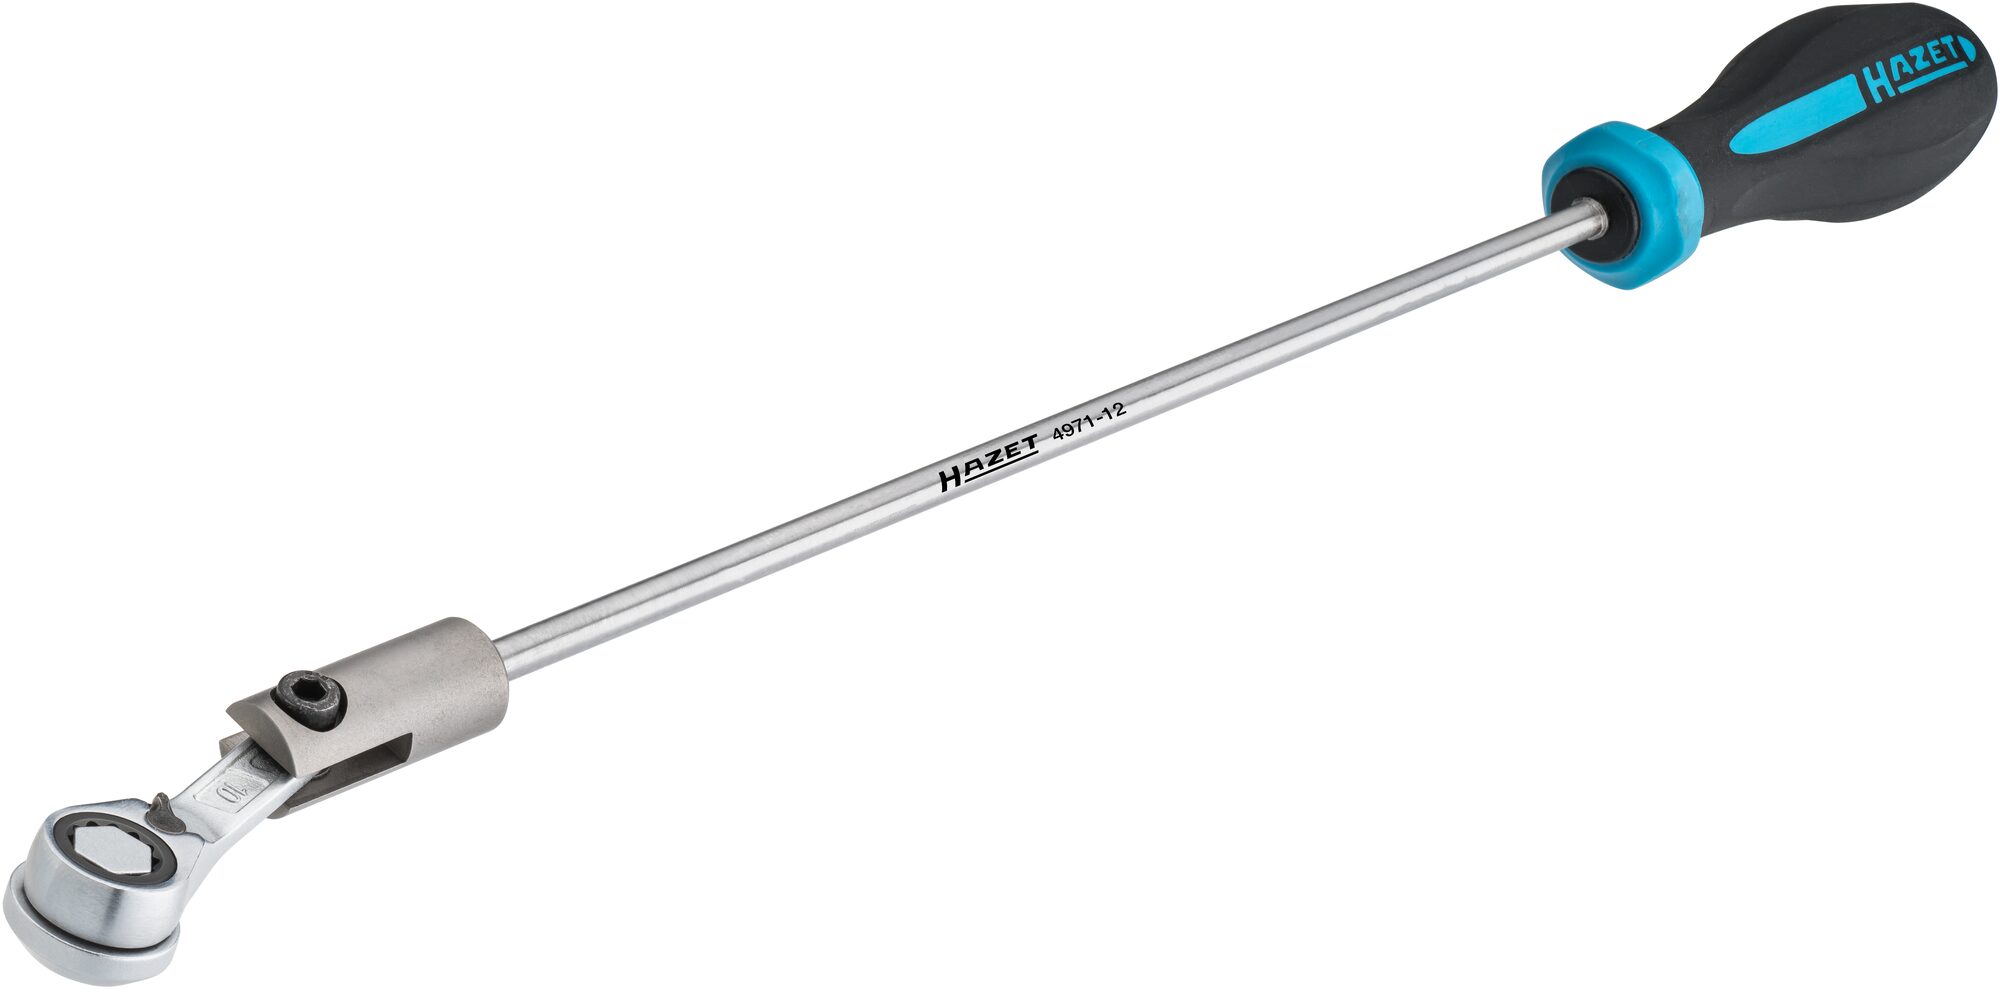 HAZET Bremssattel-Rücksteller 4971-12 · Außen-Sechskant Profil · 8 mm